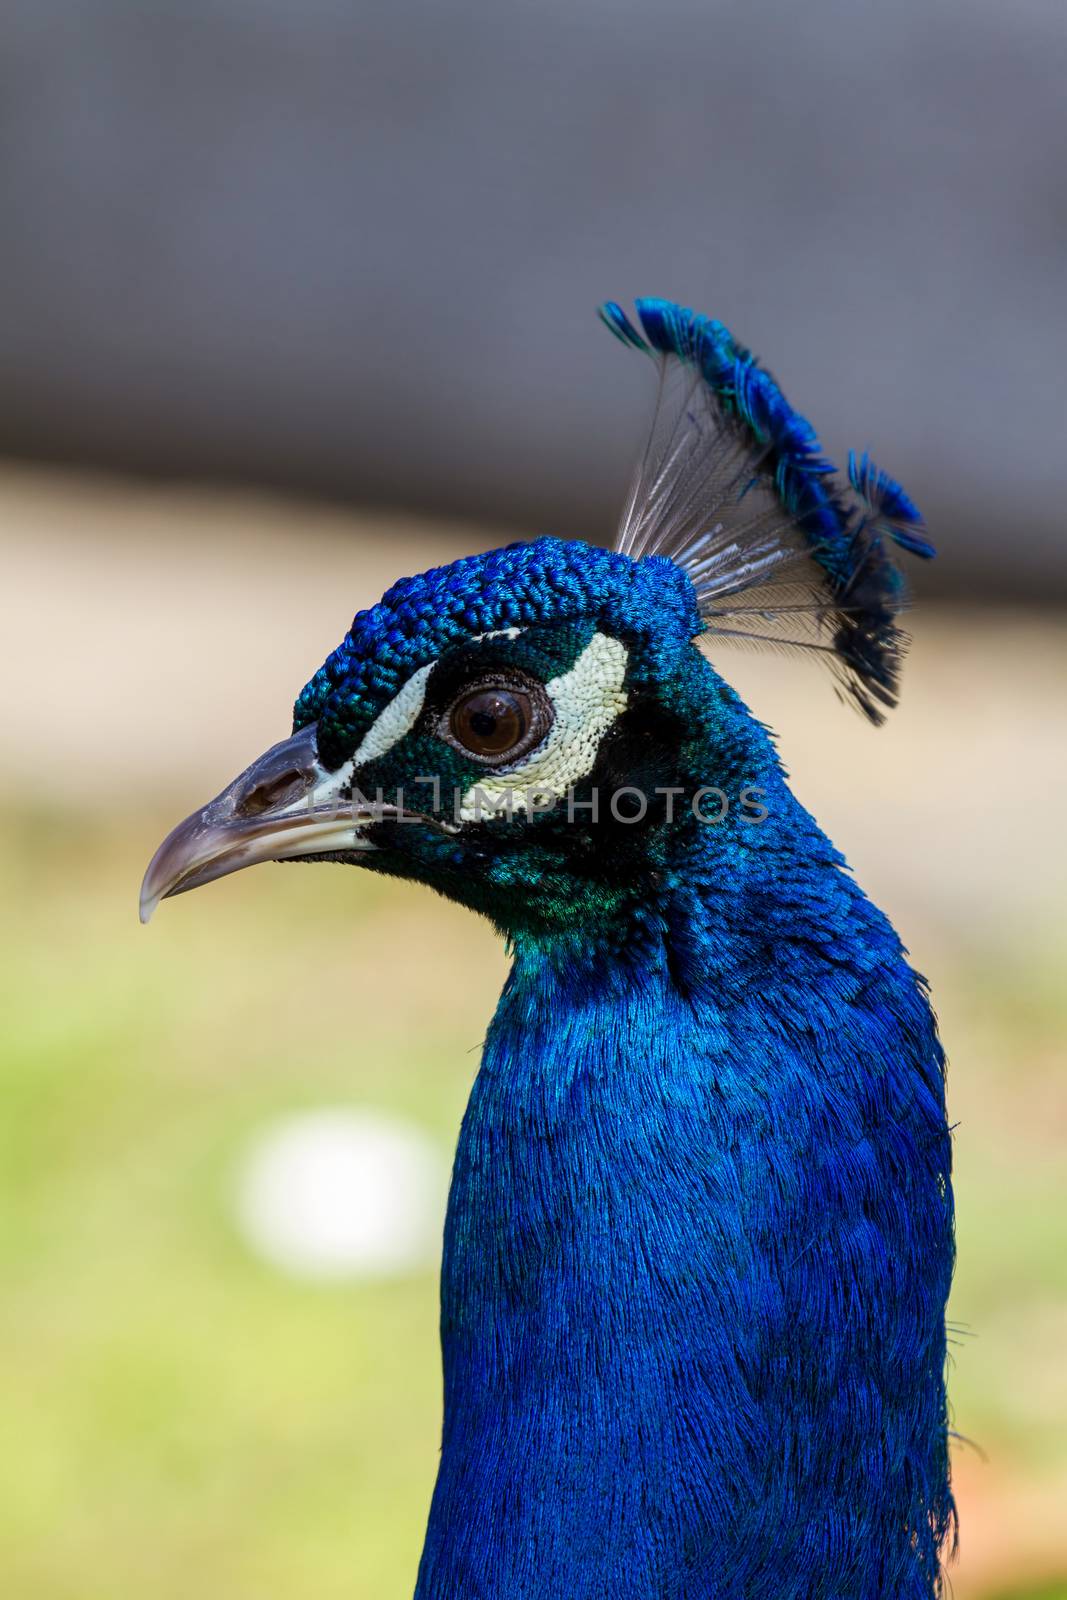 Head peacock closeup by Digoarpi